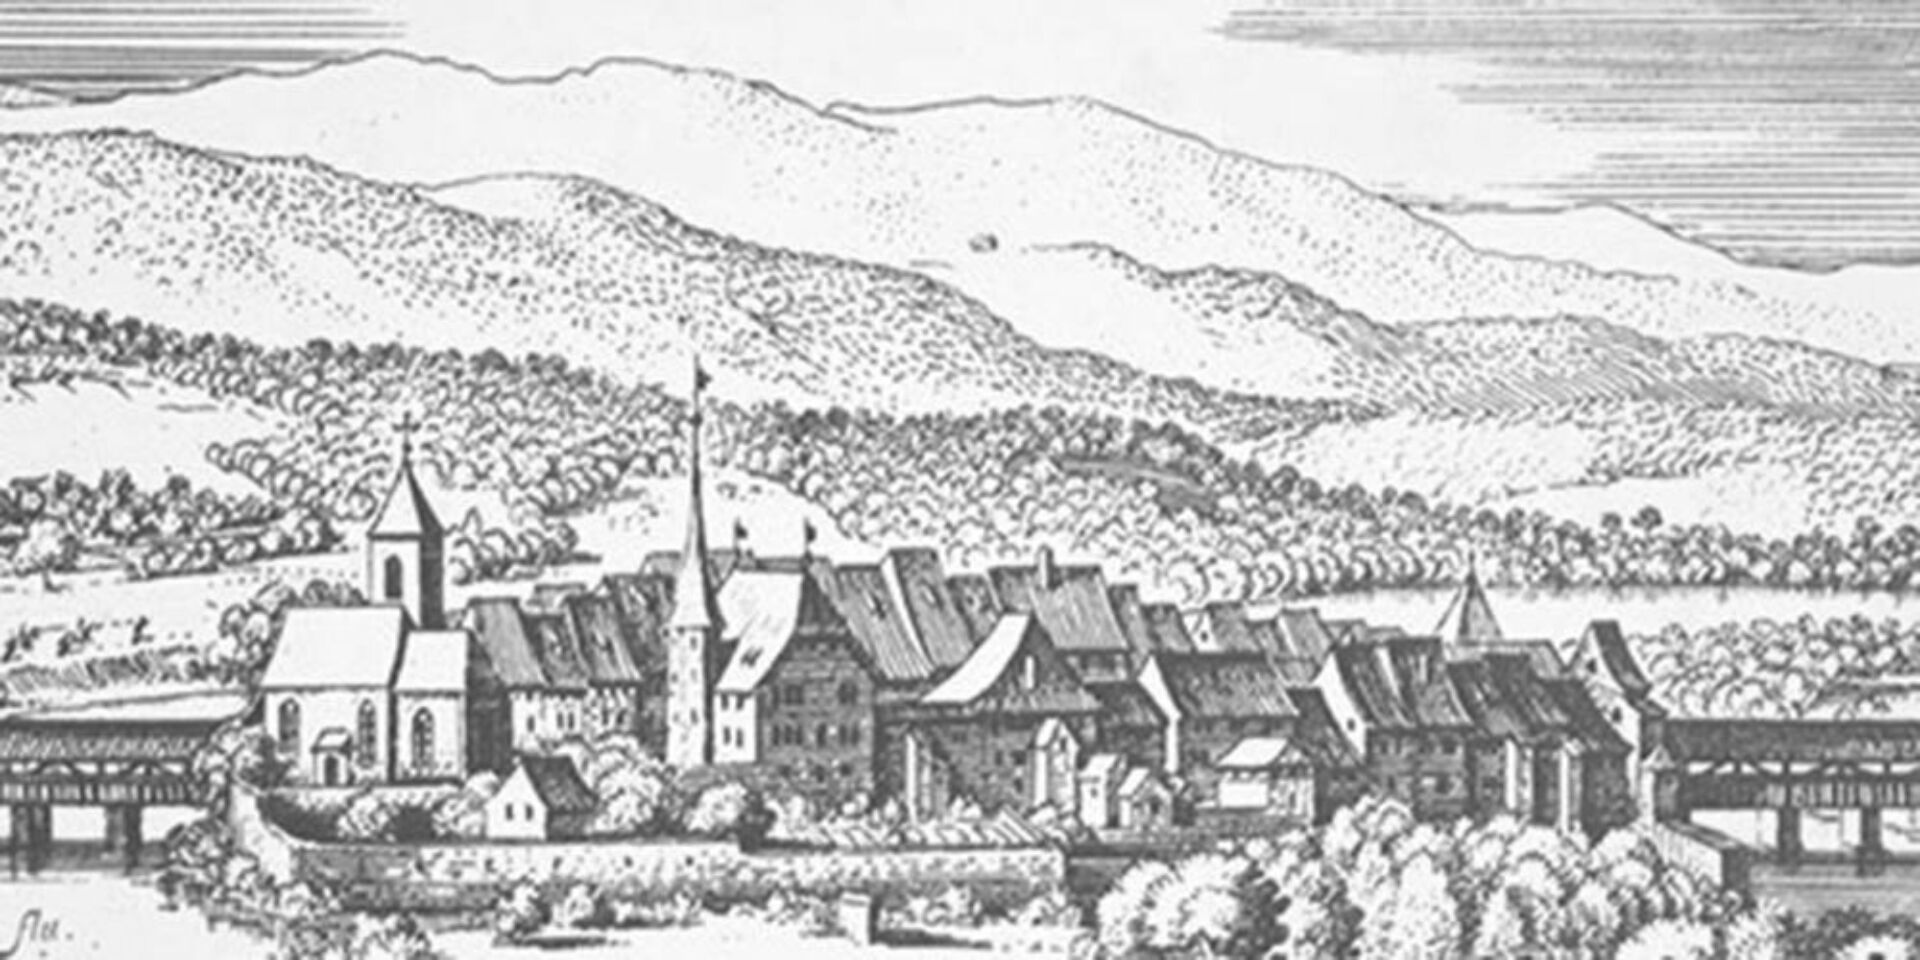 Staedtebauliche Studie Altstadt Aarberg Holzschnitt nach Merian 1642